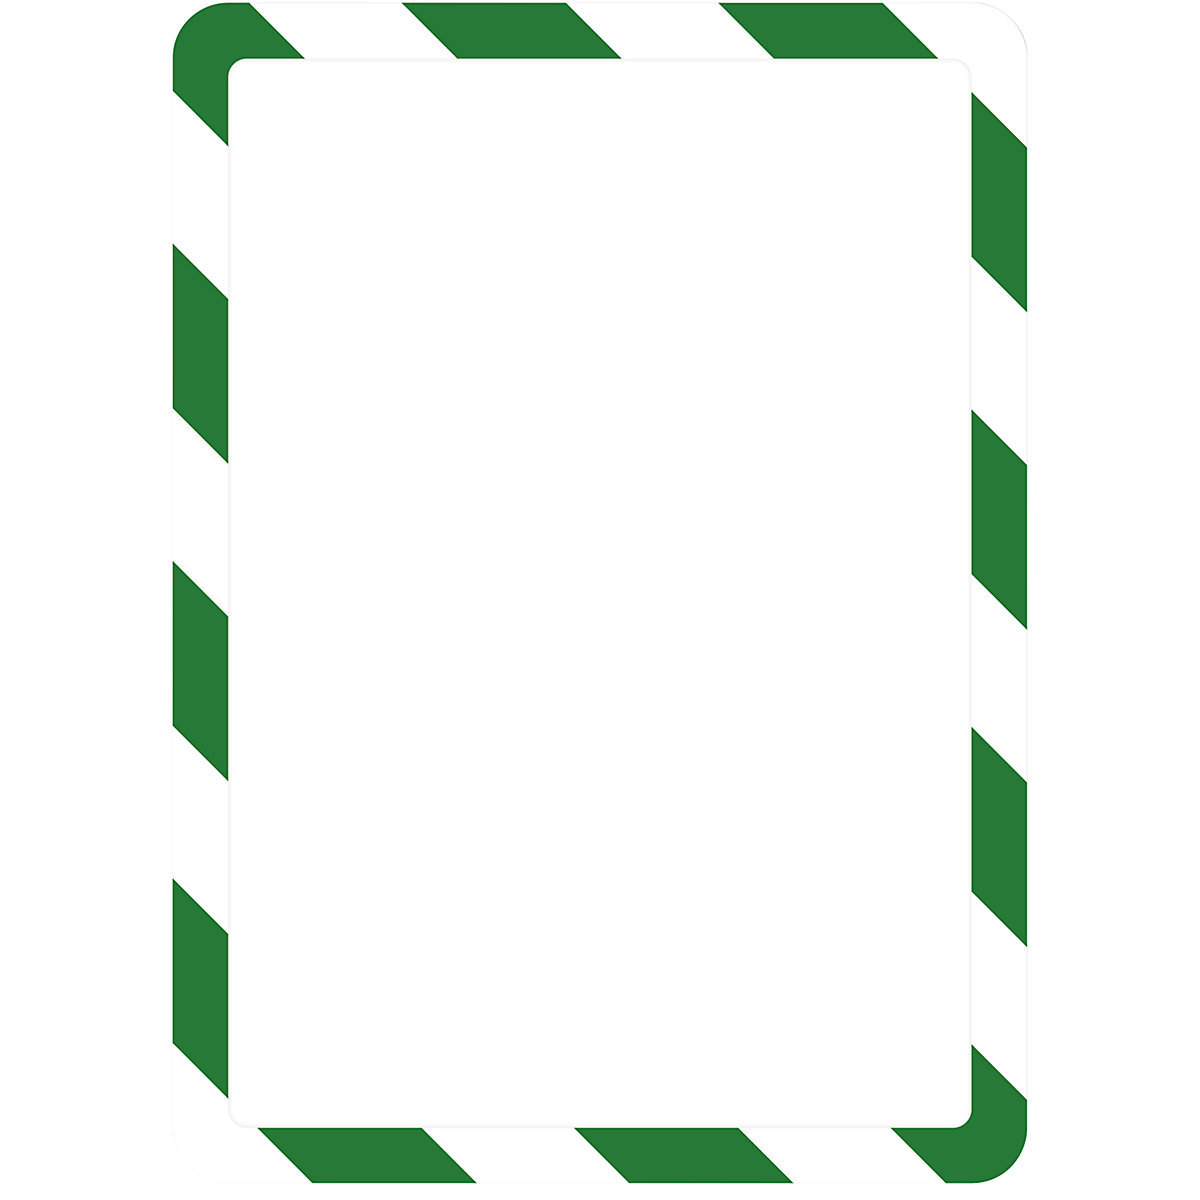 Busta trasparente per presentazioni UNI A4 – Tarifold, con chiusura magnetica, verde / bianco, conf. da 2 pz.-8